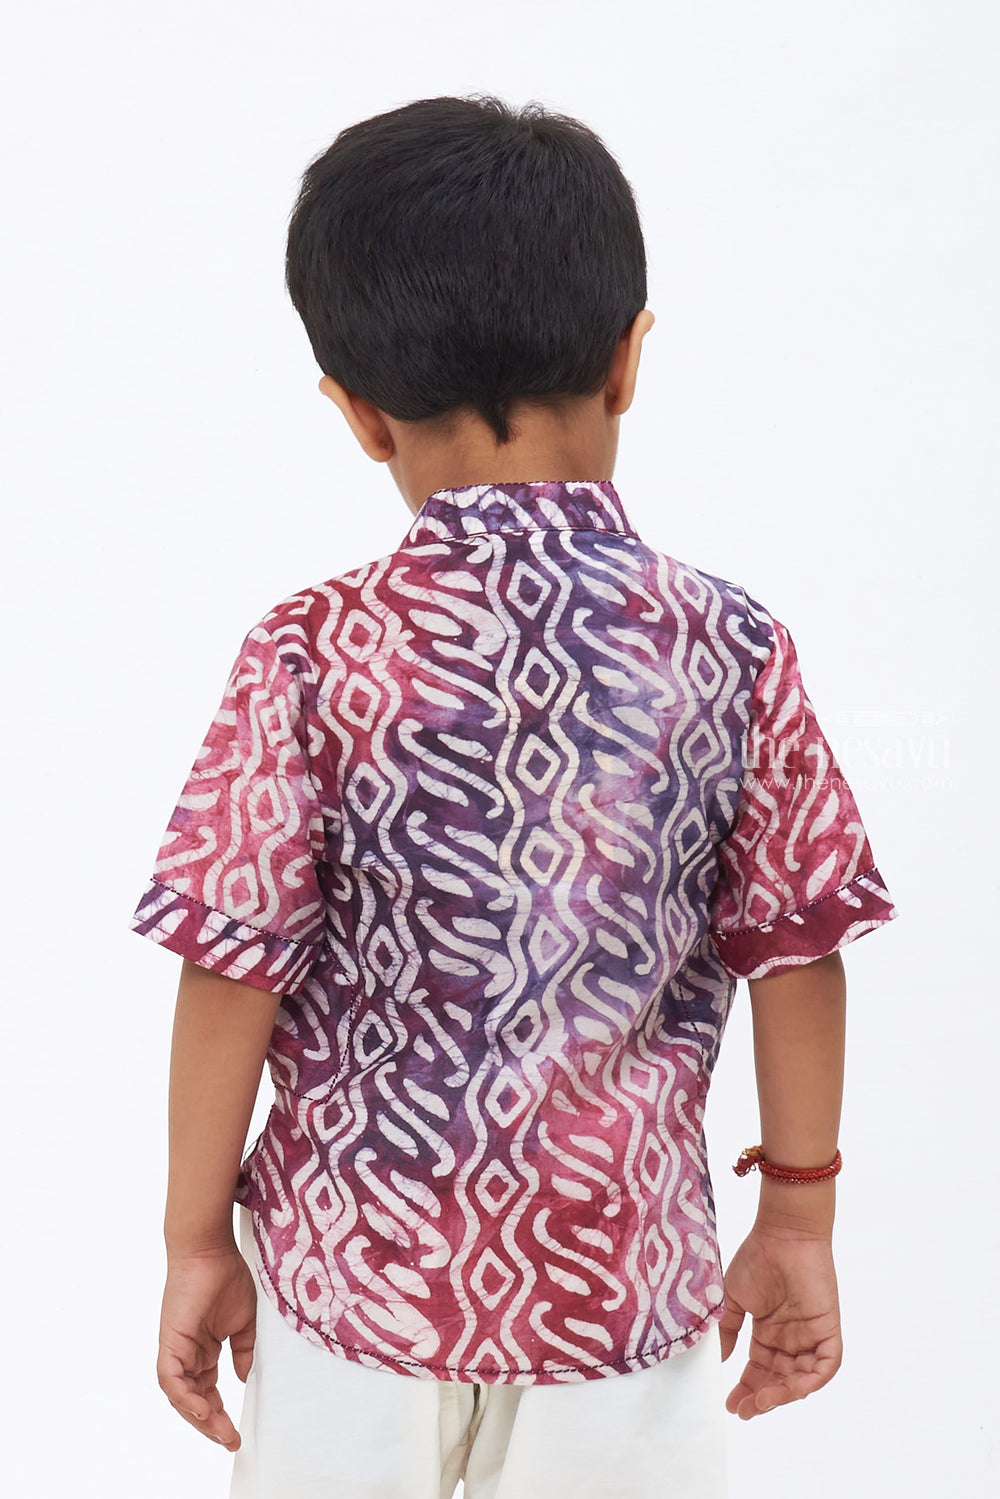 The Nesavu Boys Kurtha Shirt Boys Purple Cotton Shirt with Abstract Geometric Pattern Nesavu Boys Purple Cotton Shirt Abstract Geometric Design | Trendy Casual Wear | The Nesavu